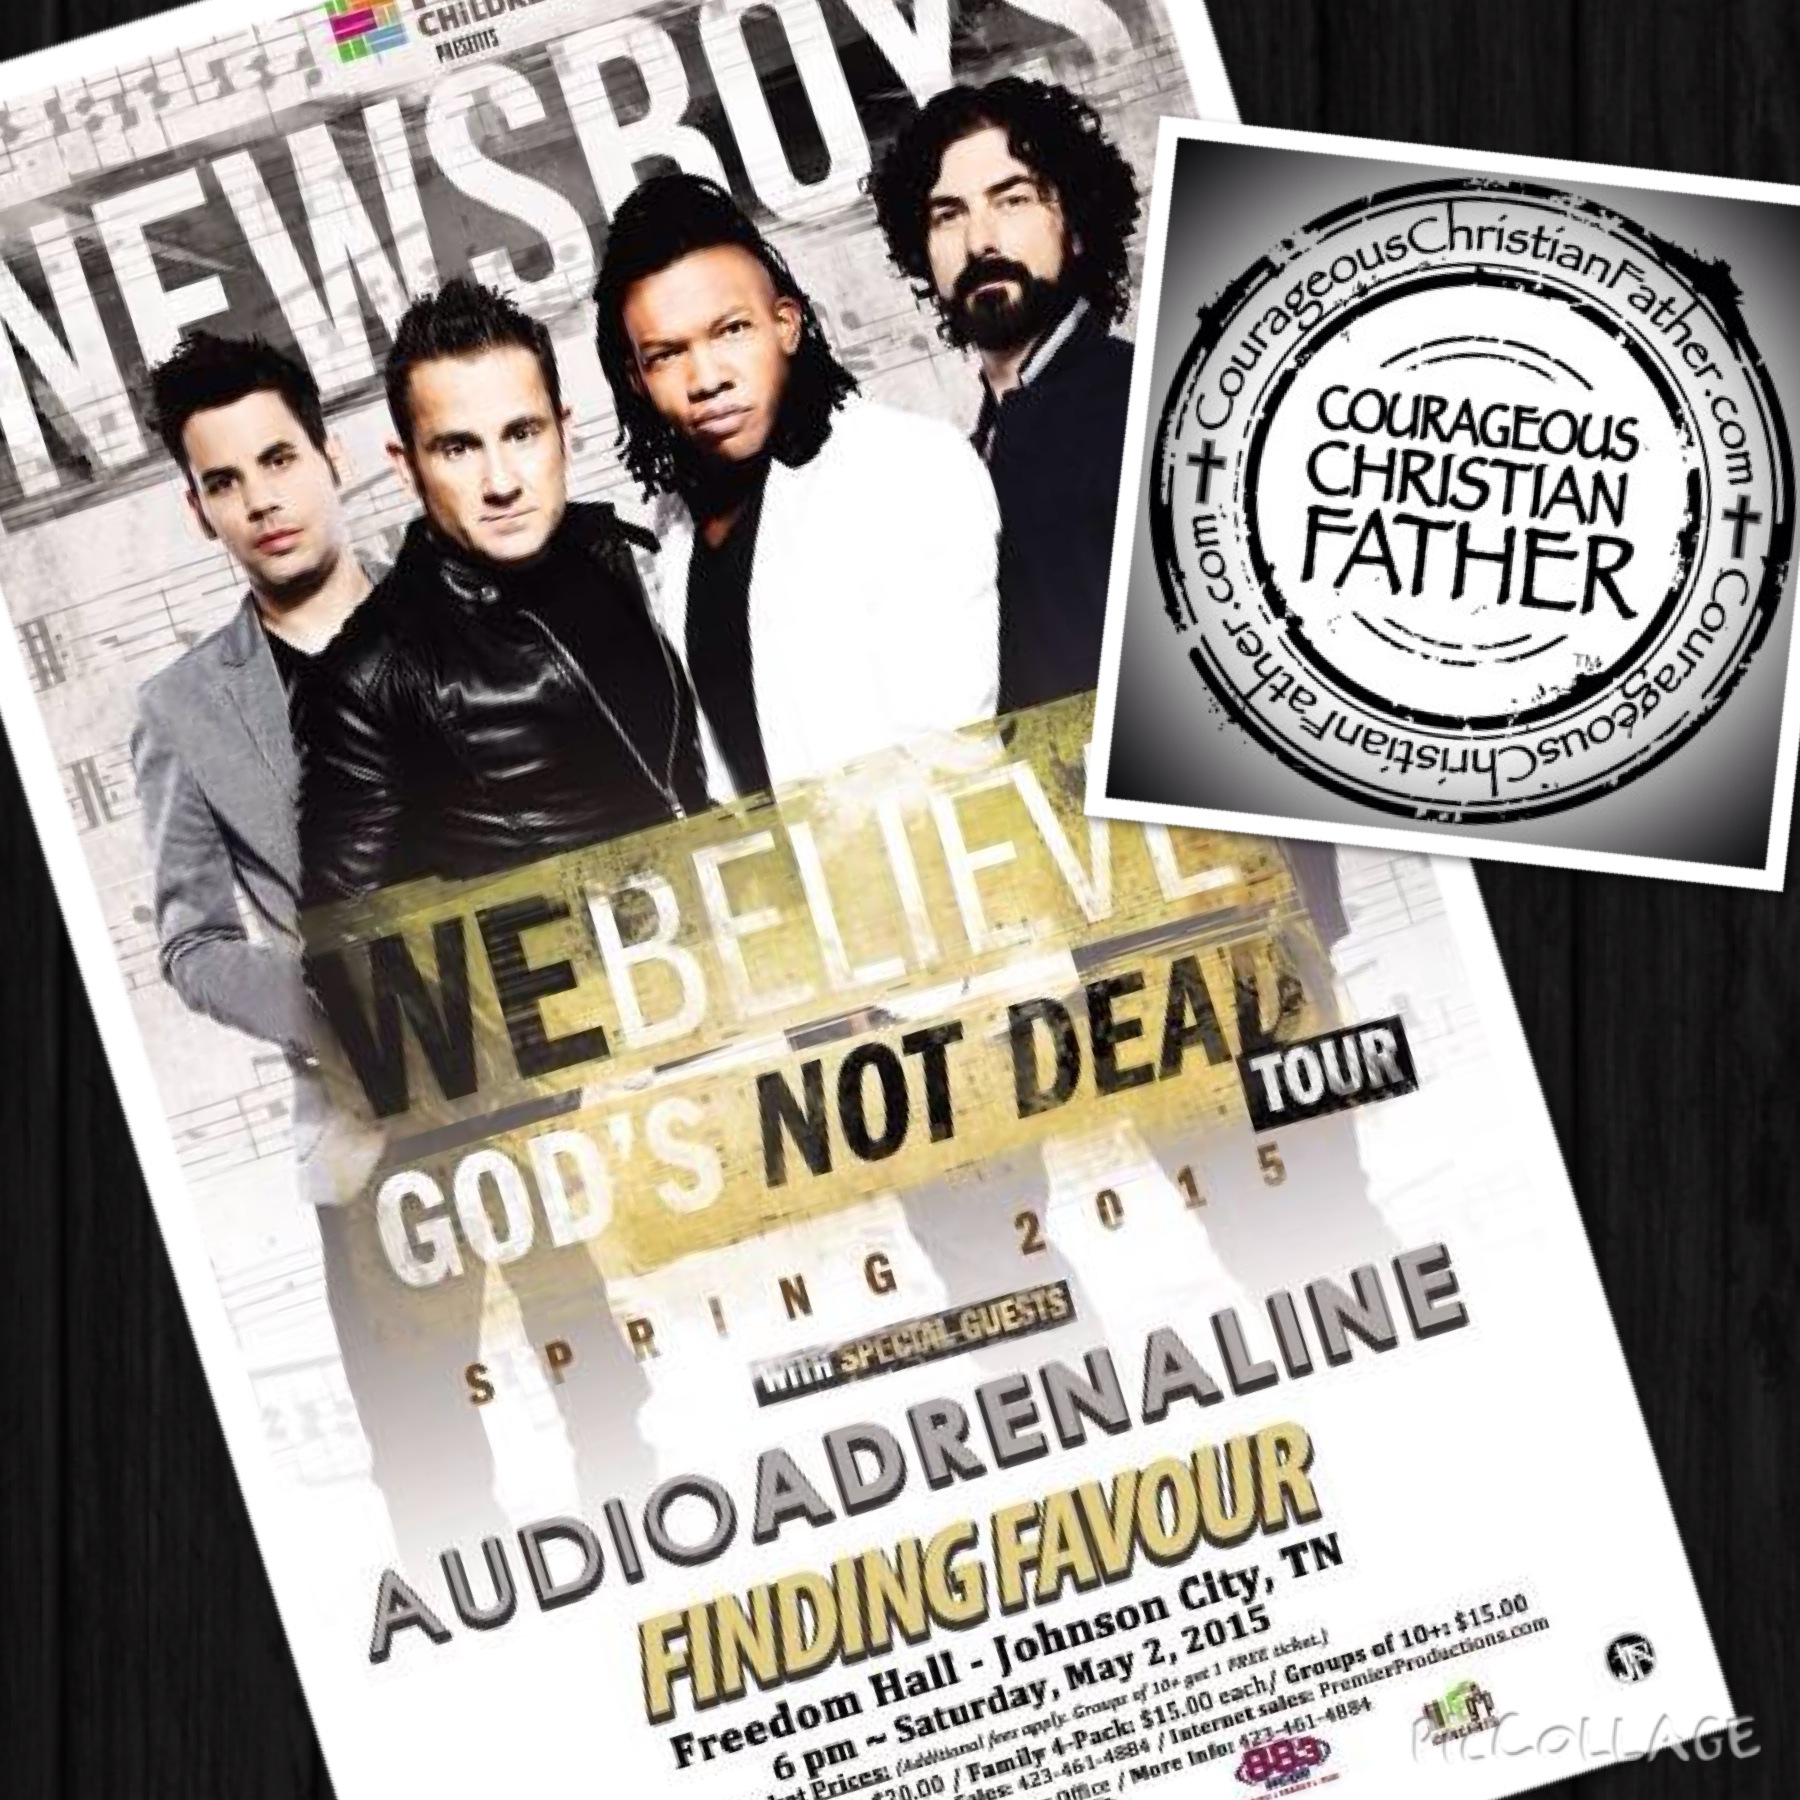 Newsboys We Believe God's Not Dead Tour - Johnson City, TN